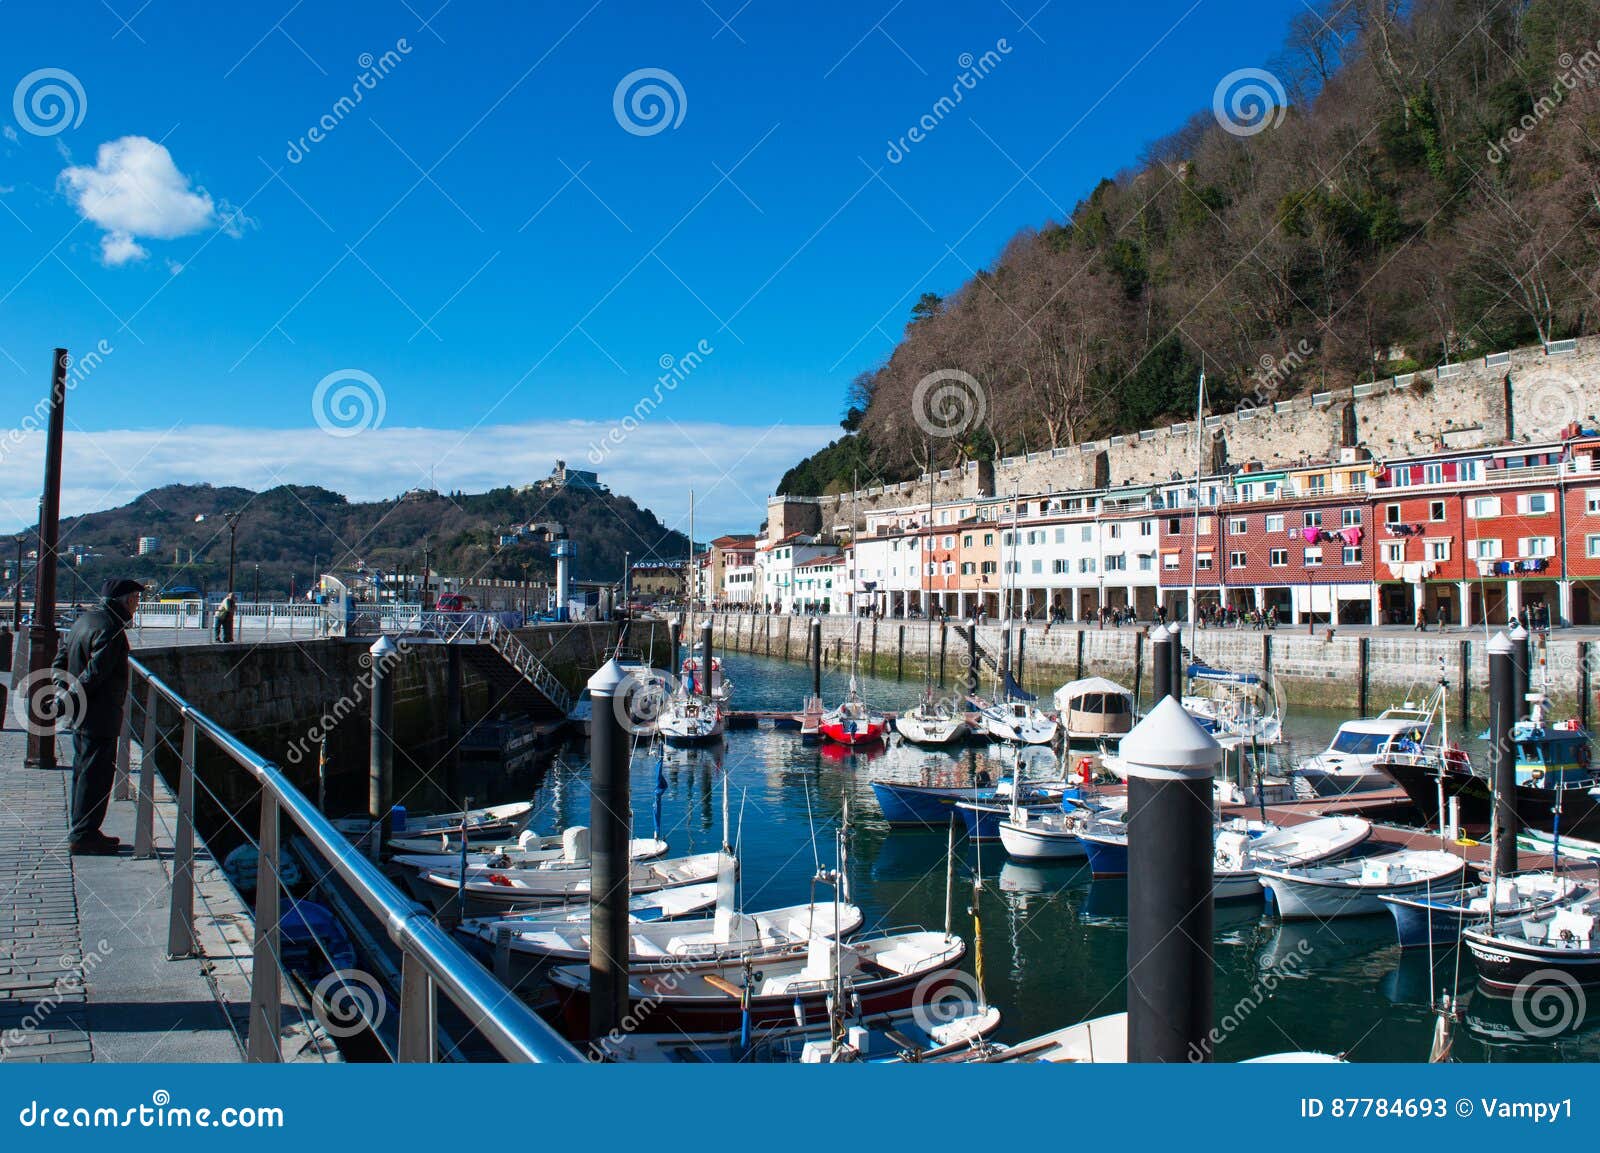 the skylne of san sebastian, donostia, port, boats, bay of biscay, basque country, spain, europe